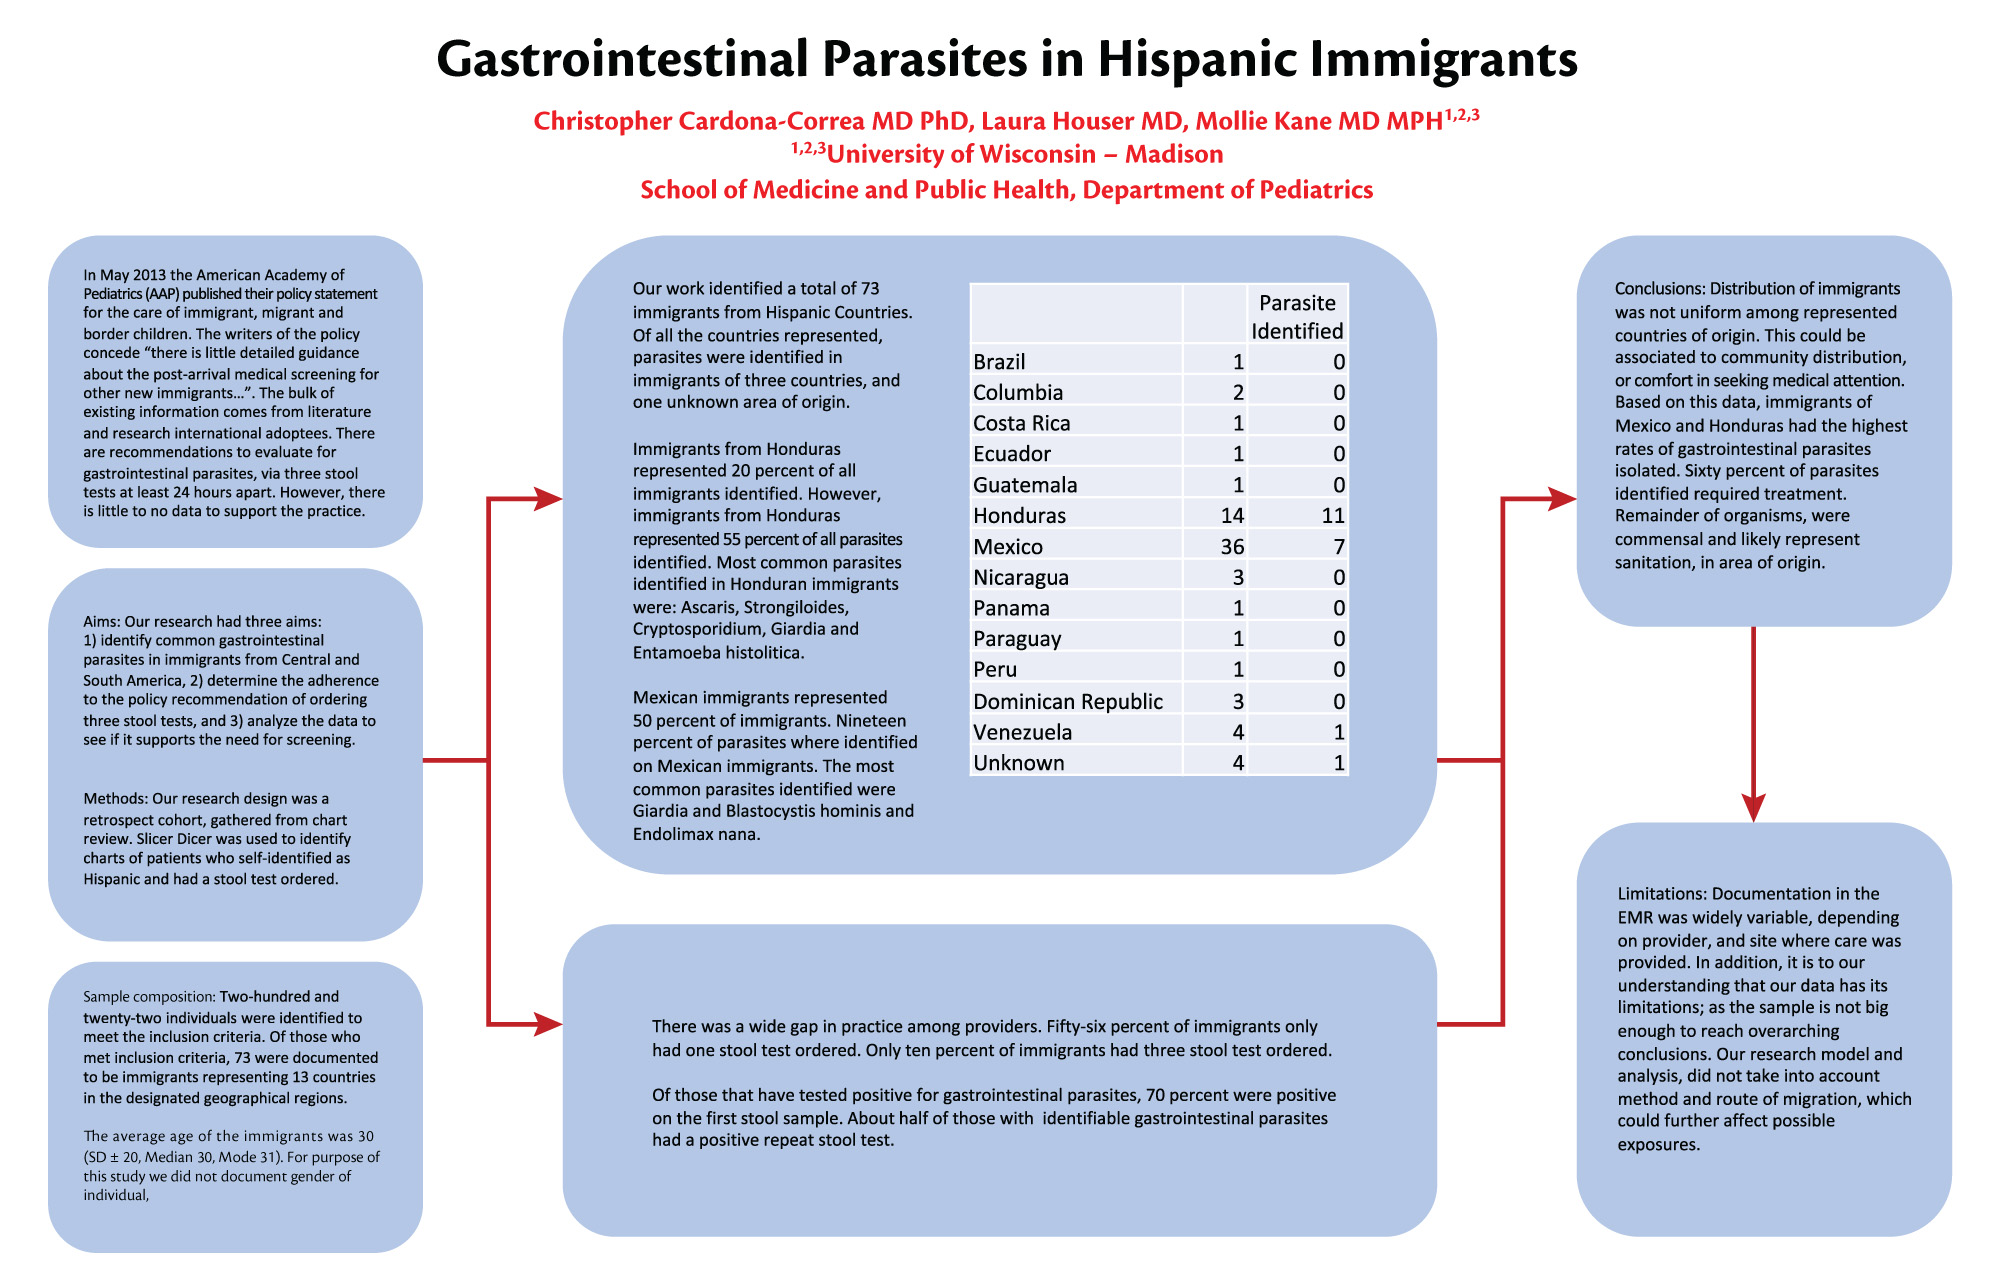 Gastrointestinal Parasites inHispanic Immigrants poster image